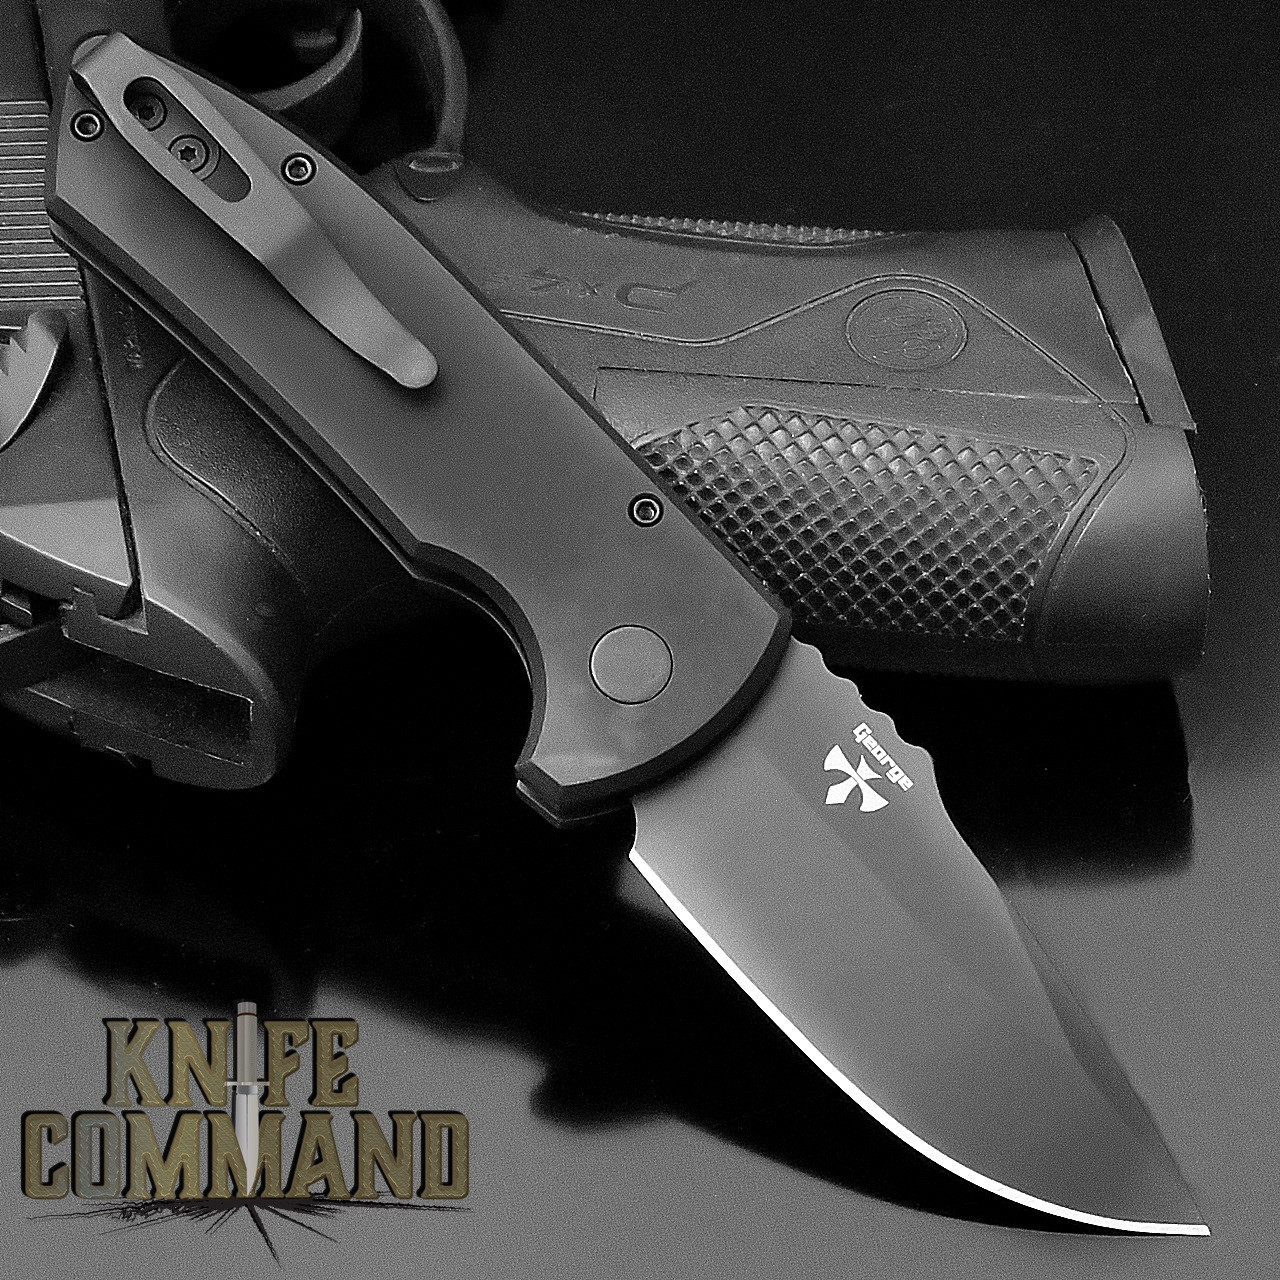 Pro-Tech Knives SBR Short Blade Rockeye Automatic Knife LG407 Les George Folder Black DlC S35VN Blade Textured Handle